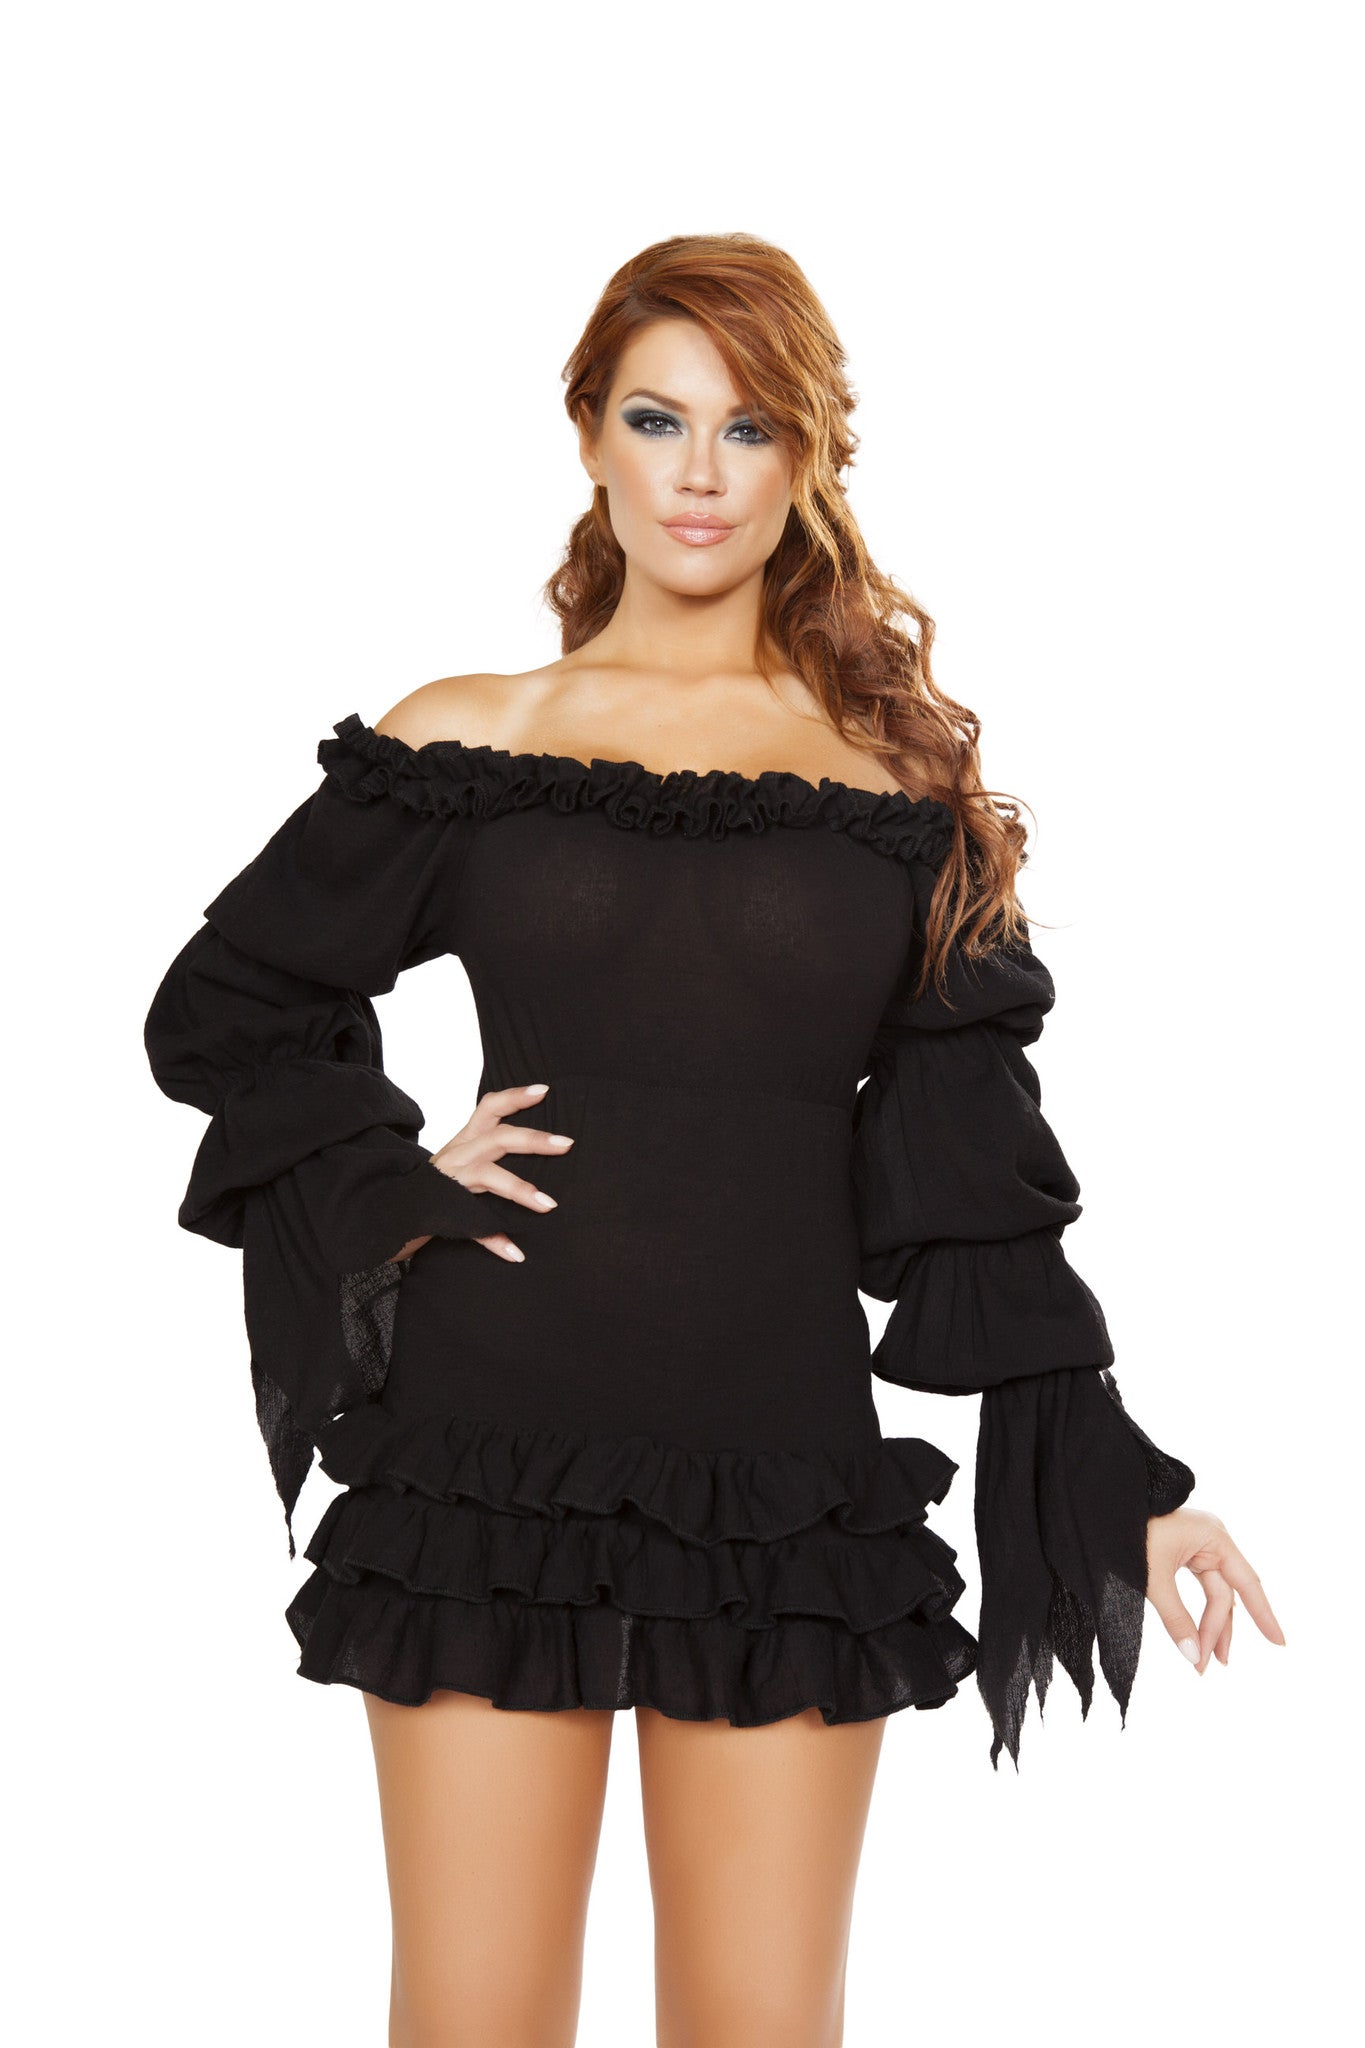 4770 - Ruffled Pirate Dress with Sleeves & Multi Layered Skirt Eye Candy Sensation